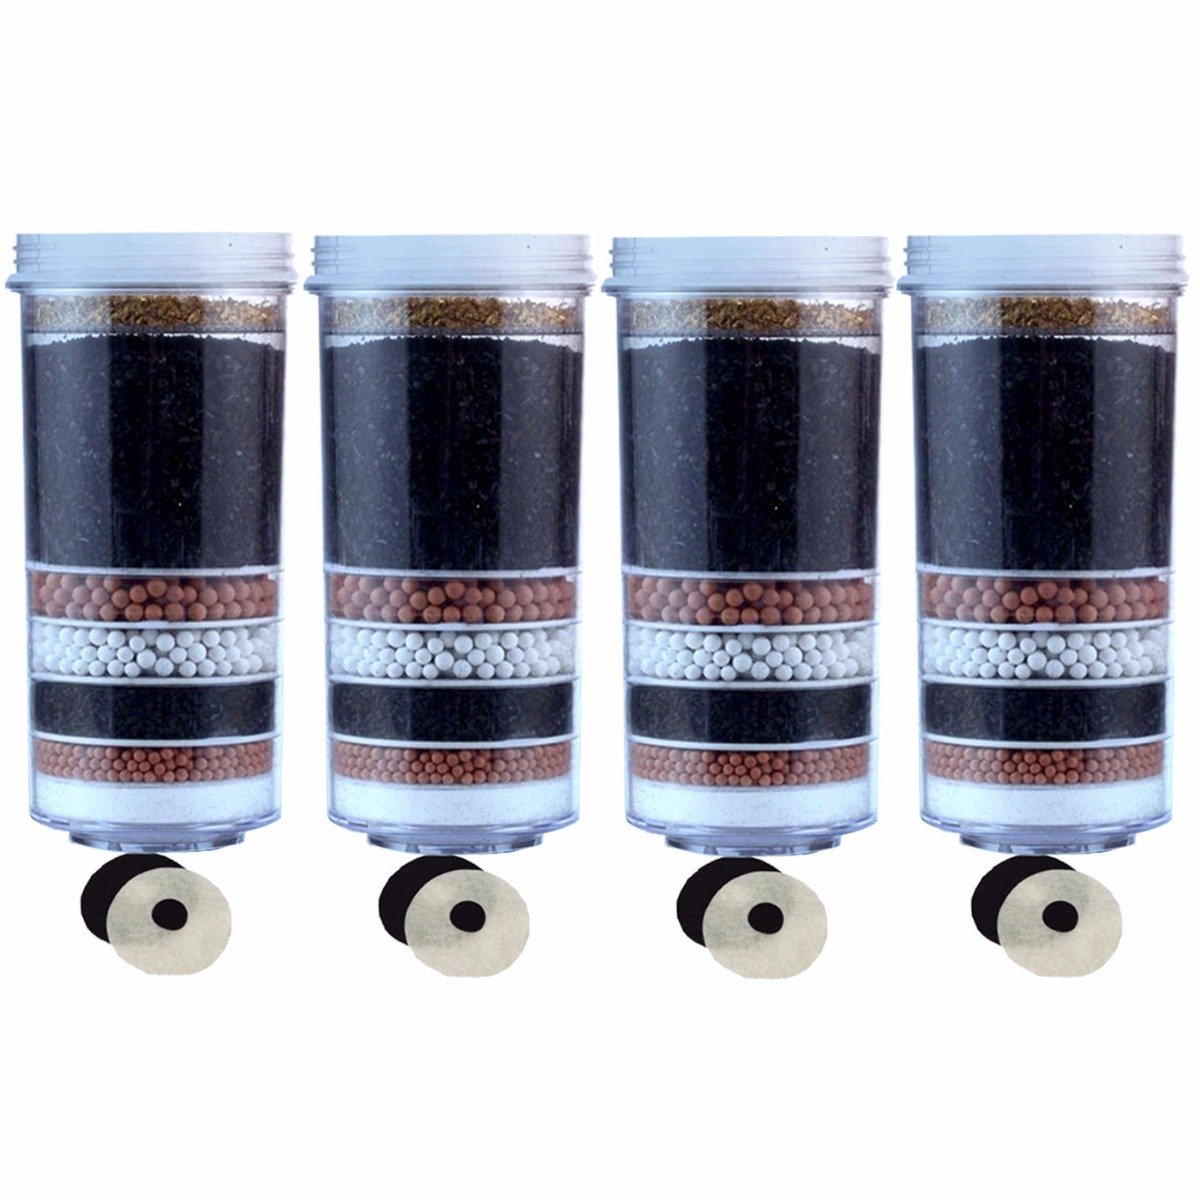 Aimex 8 Stage Water Filter Replacement Cartridge - 4pck - Mari Australia